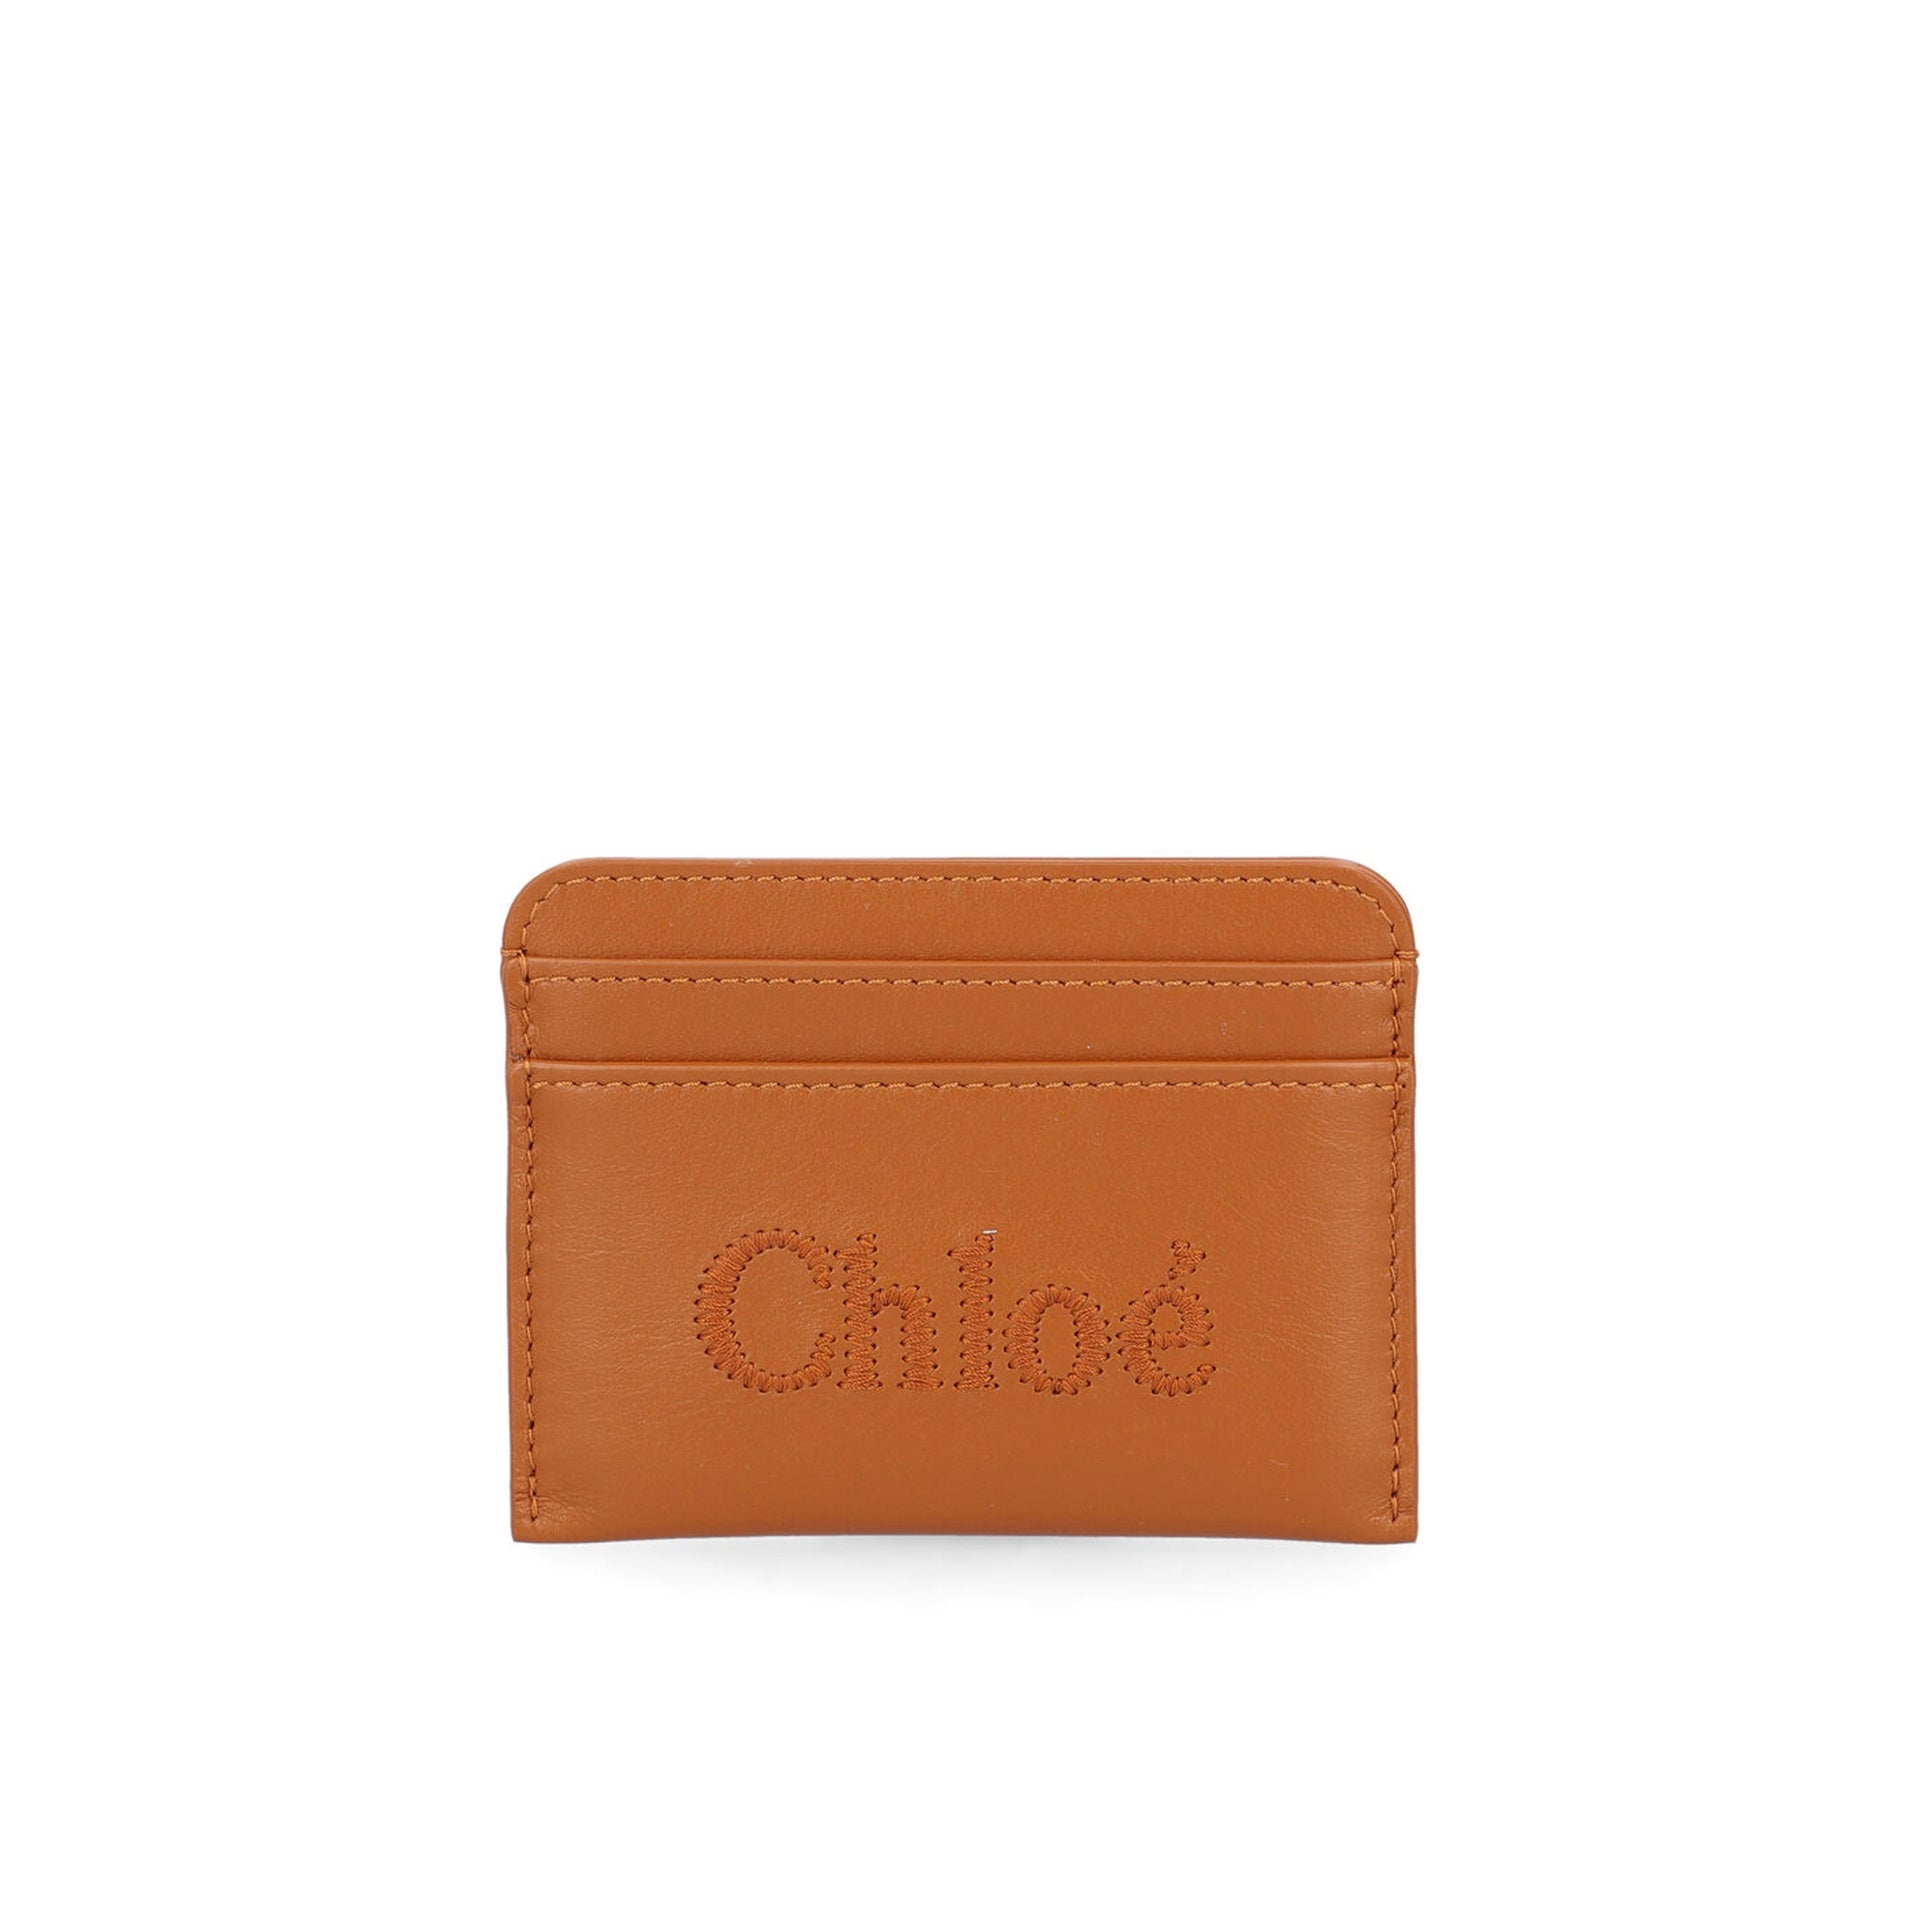 CHLOE-OUTLET-SALE-Chloe-Card-Holder-Taschen-BROWN-UNI-ARCHIVE-COLLECTION.jpg